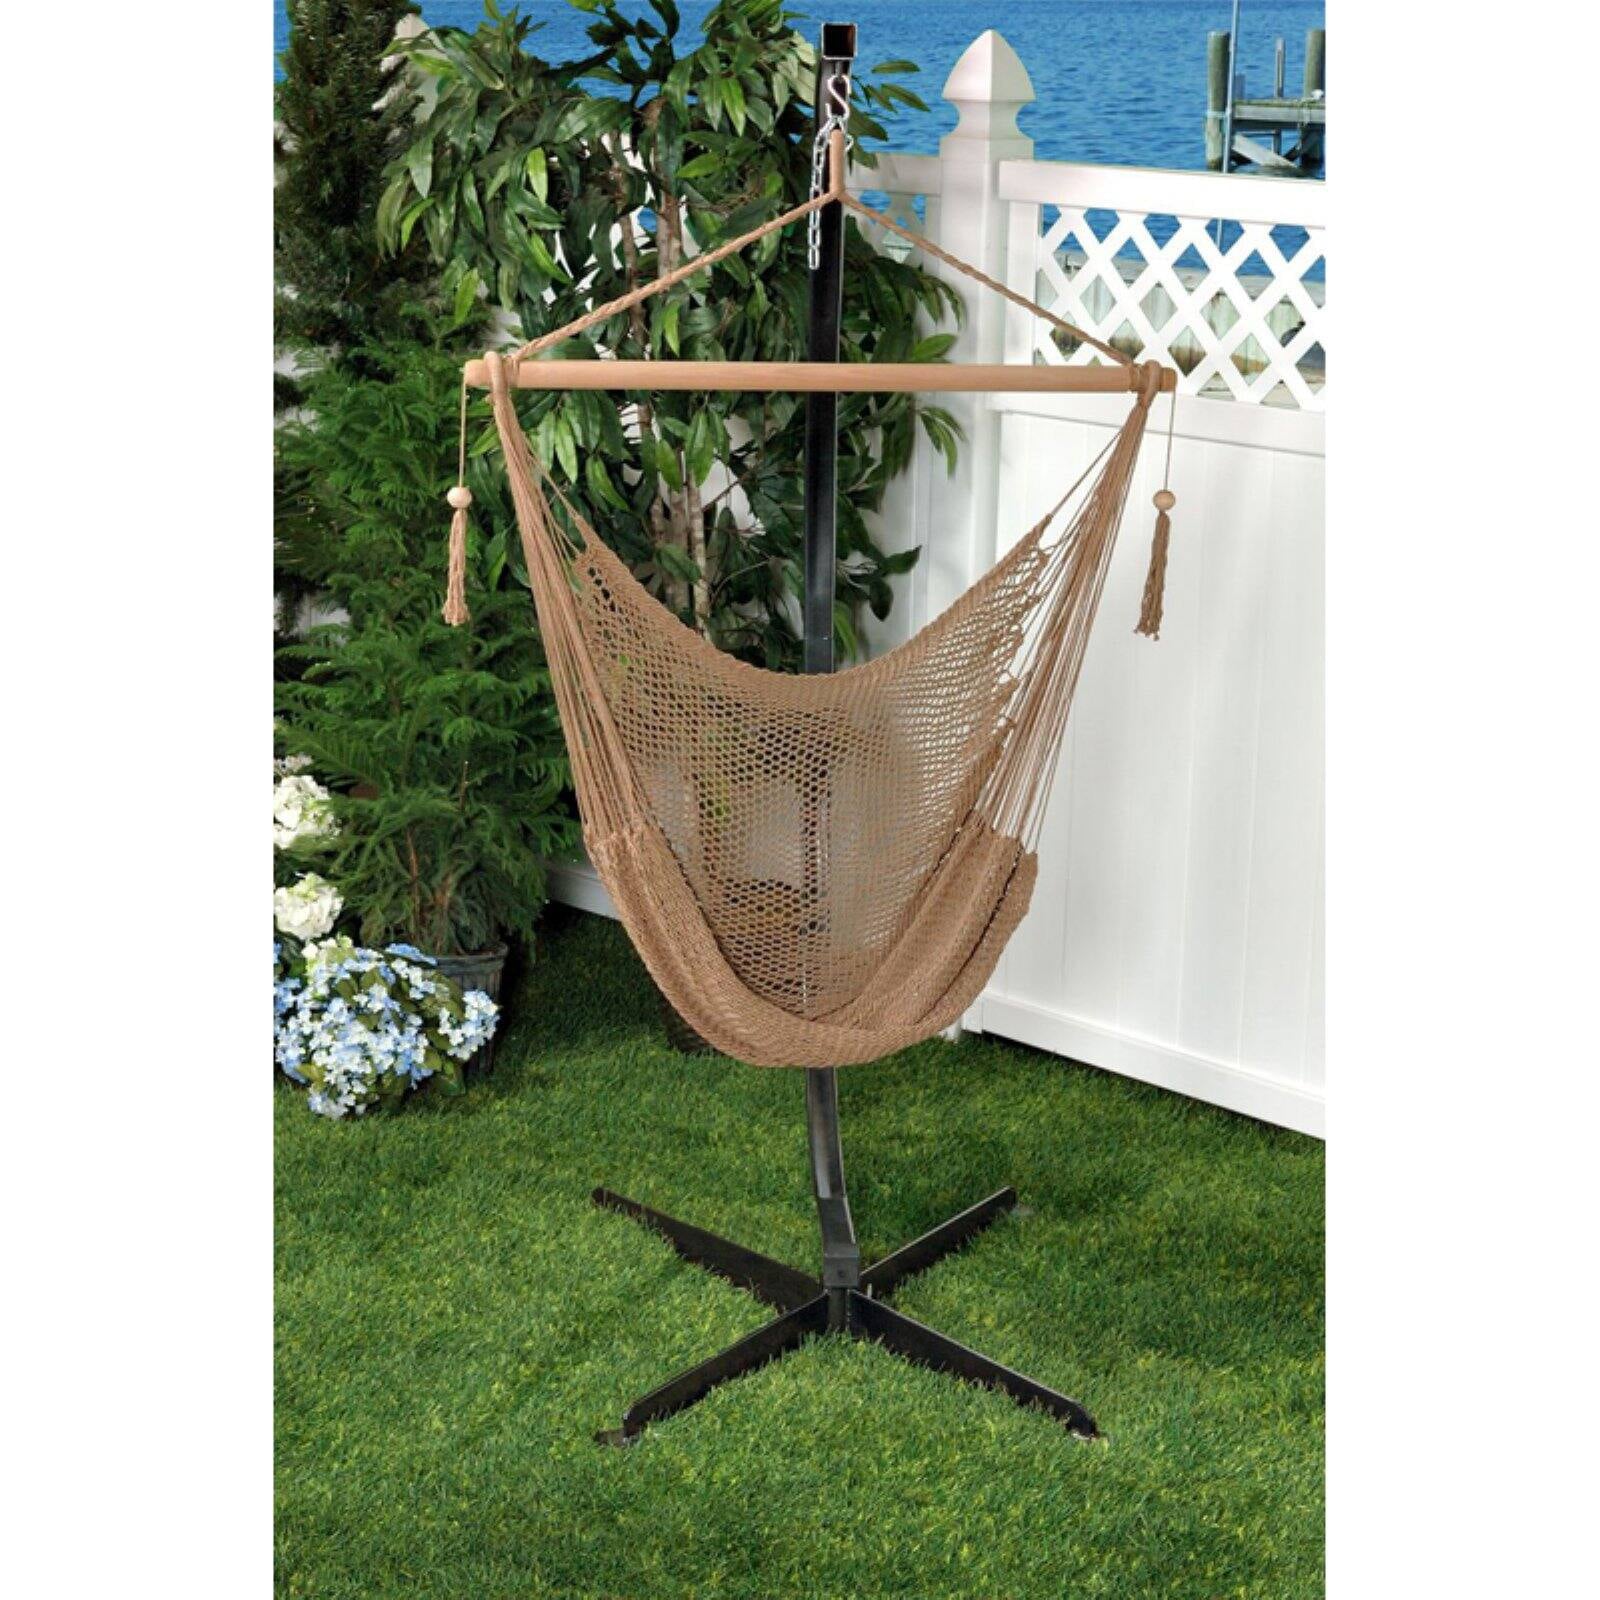 Bliss Hammocks Island Rope Hammock Chair w/ Spreader Bar - Light Green, 60" L x 40" W